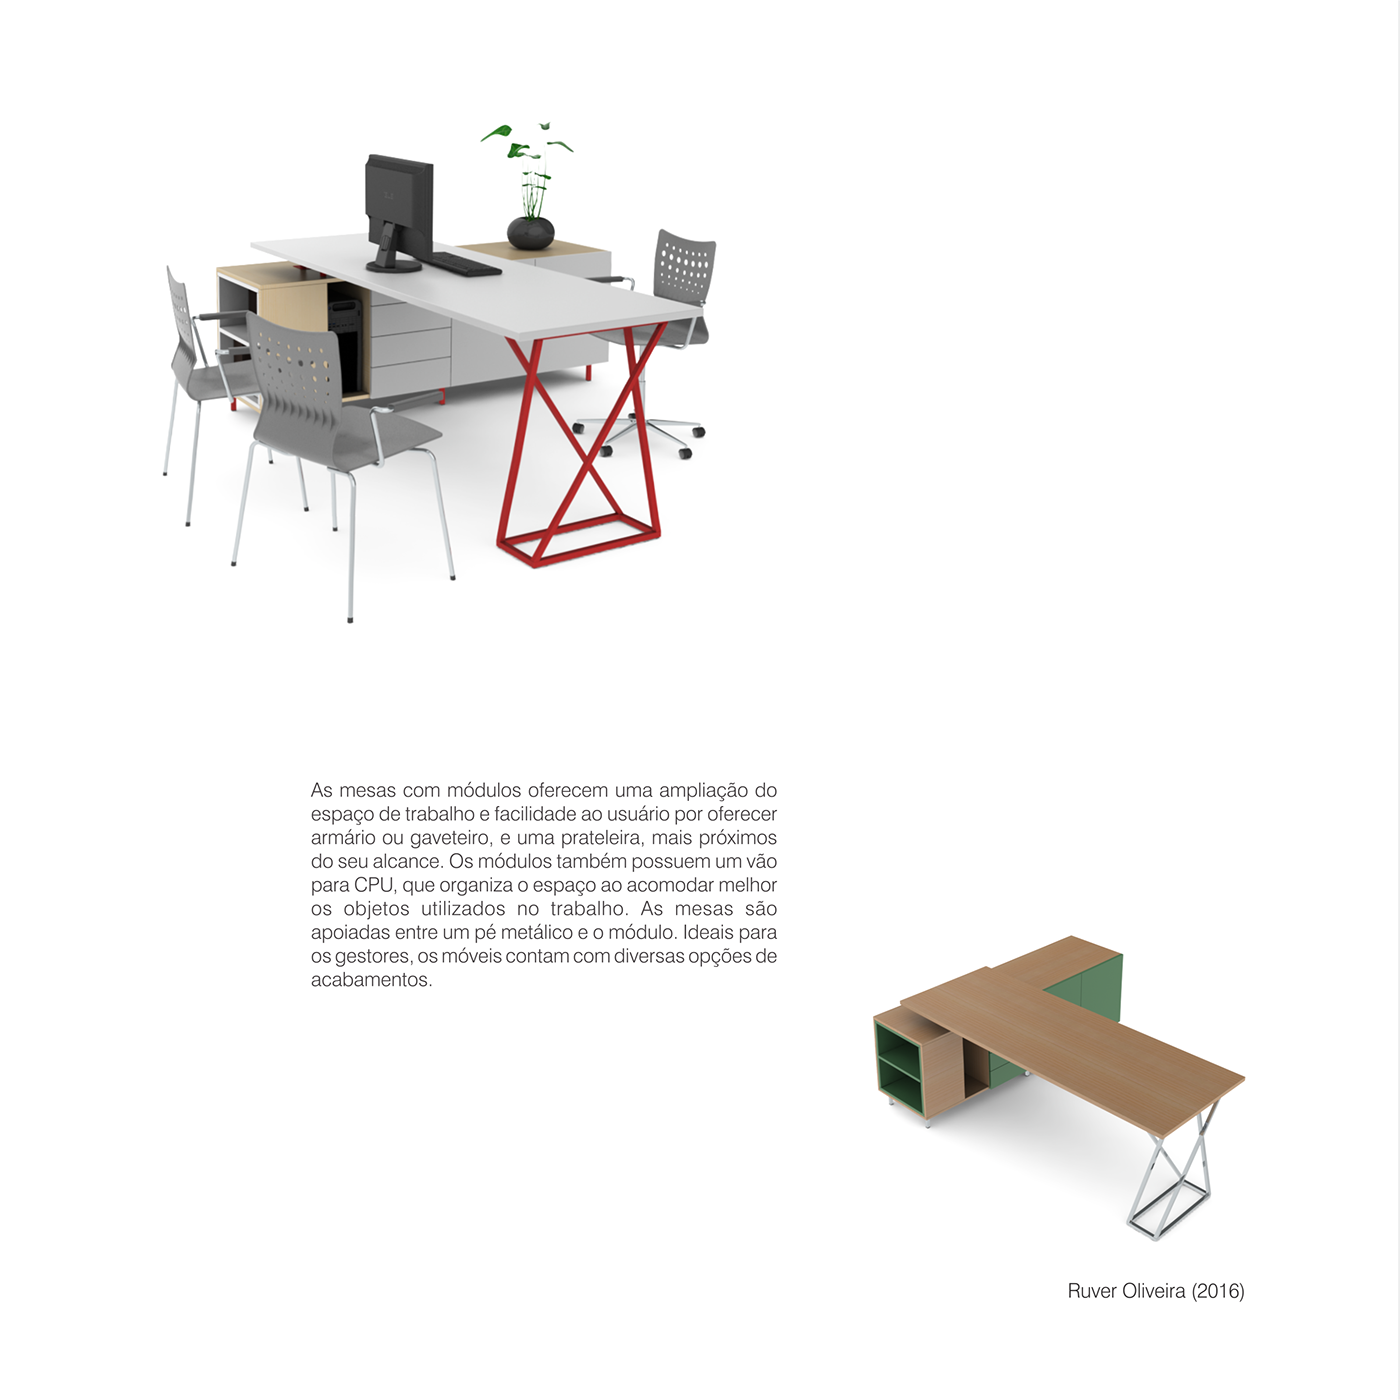 design produto product industrial móvel Mobilia furniture Office homeoffice table